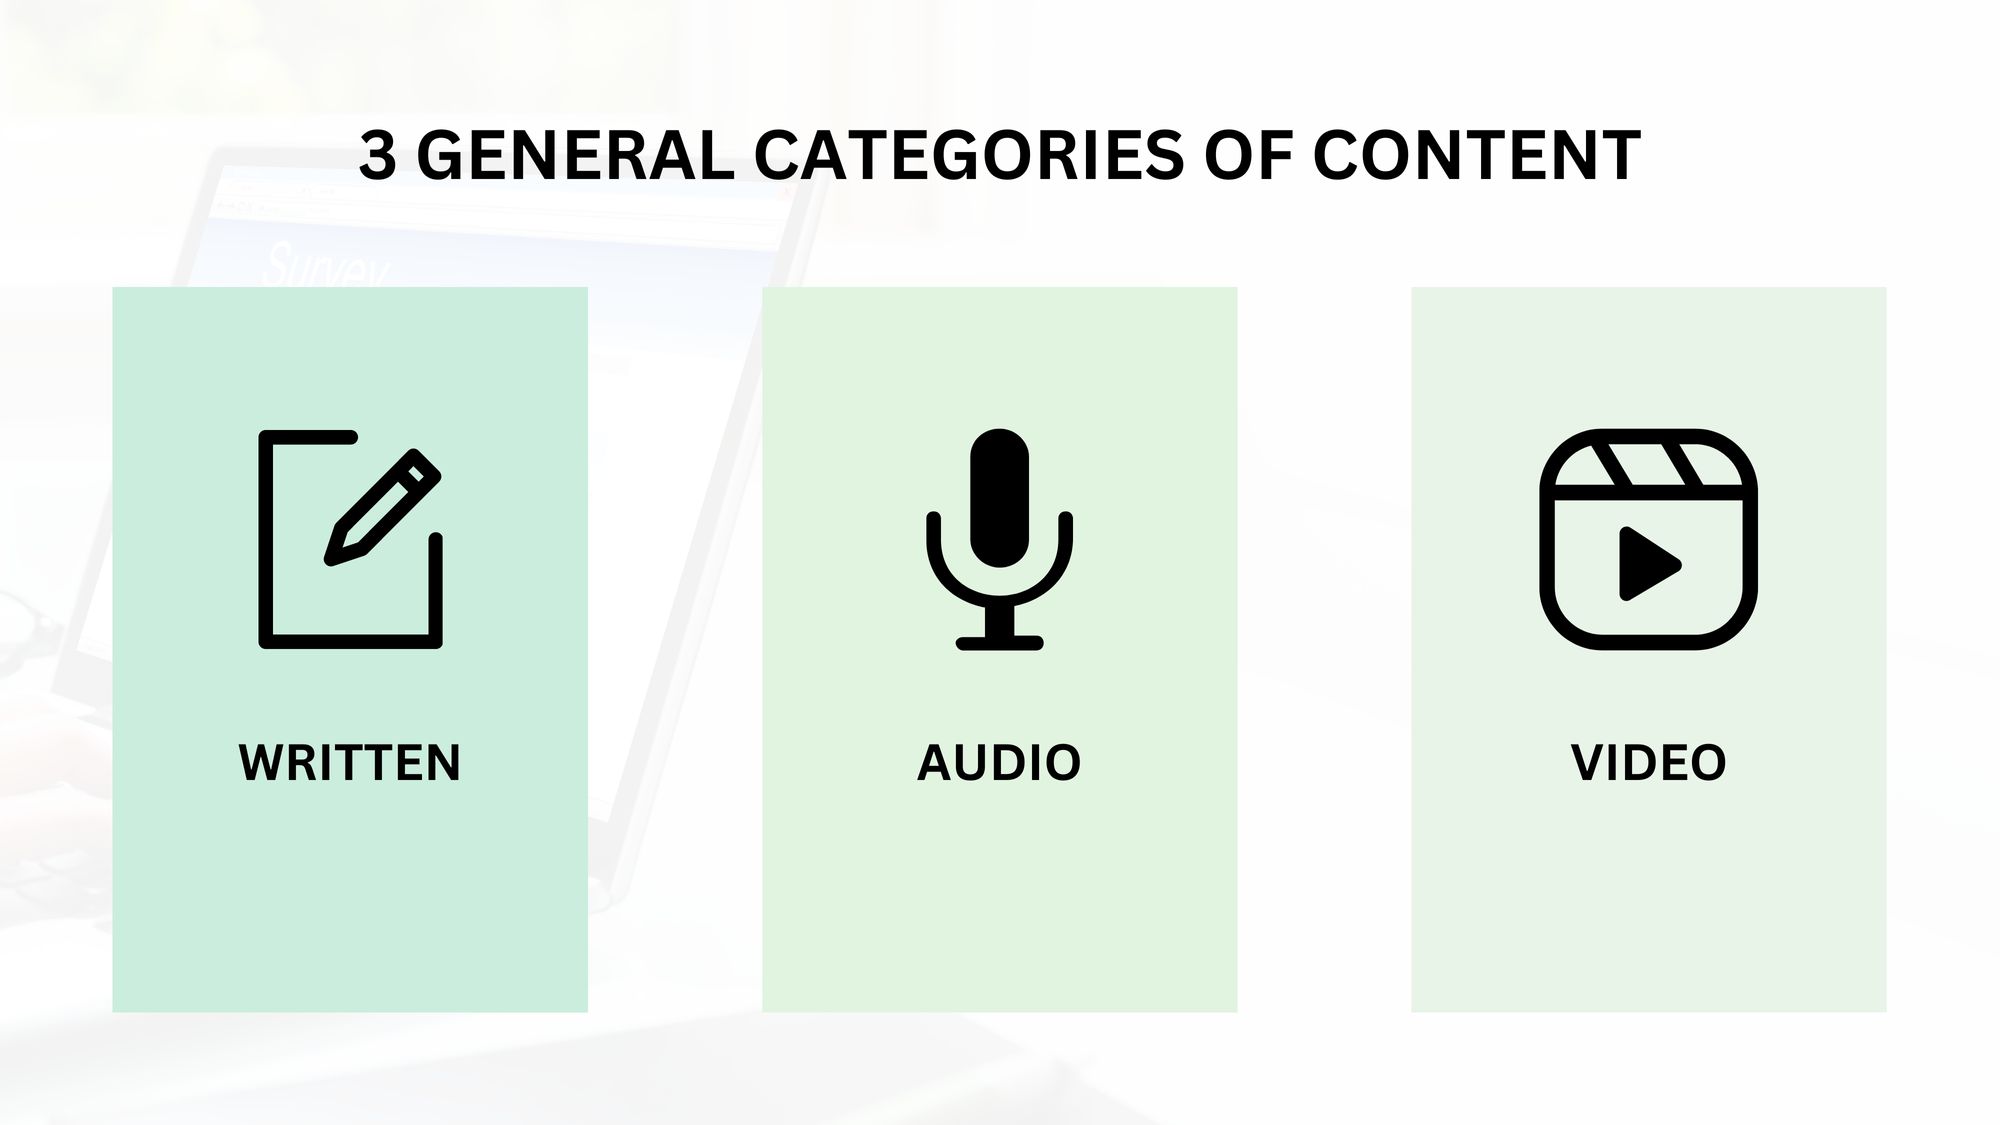 Three general categories of content: written, audio, video.